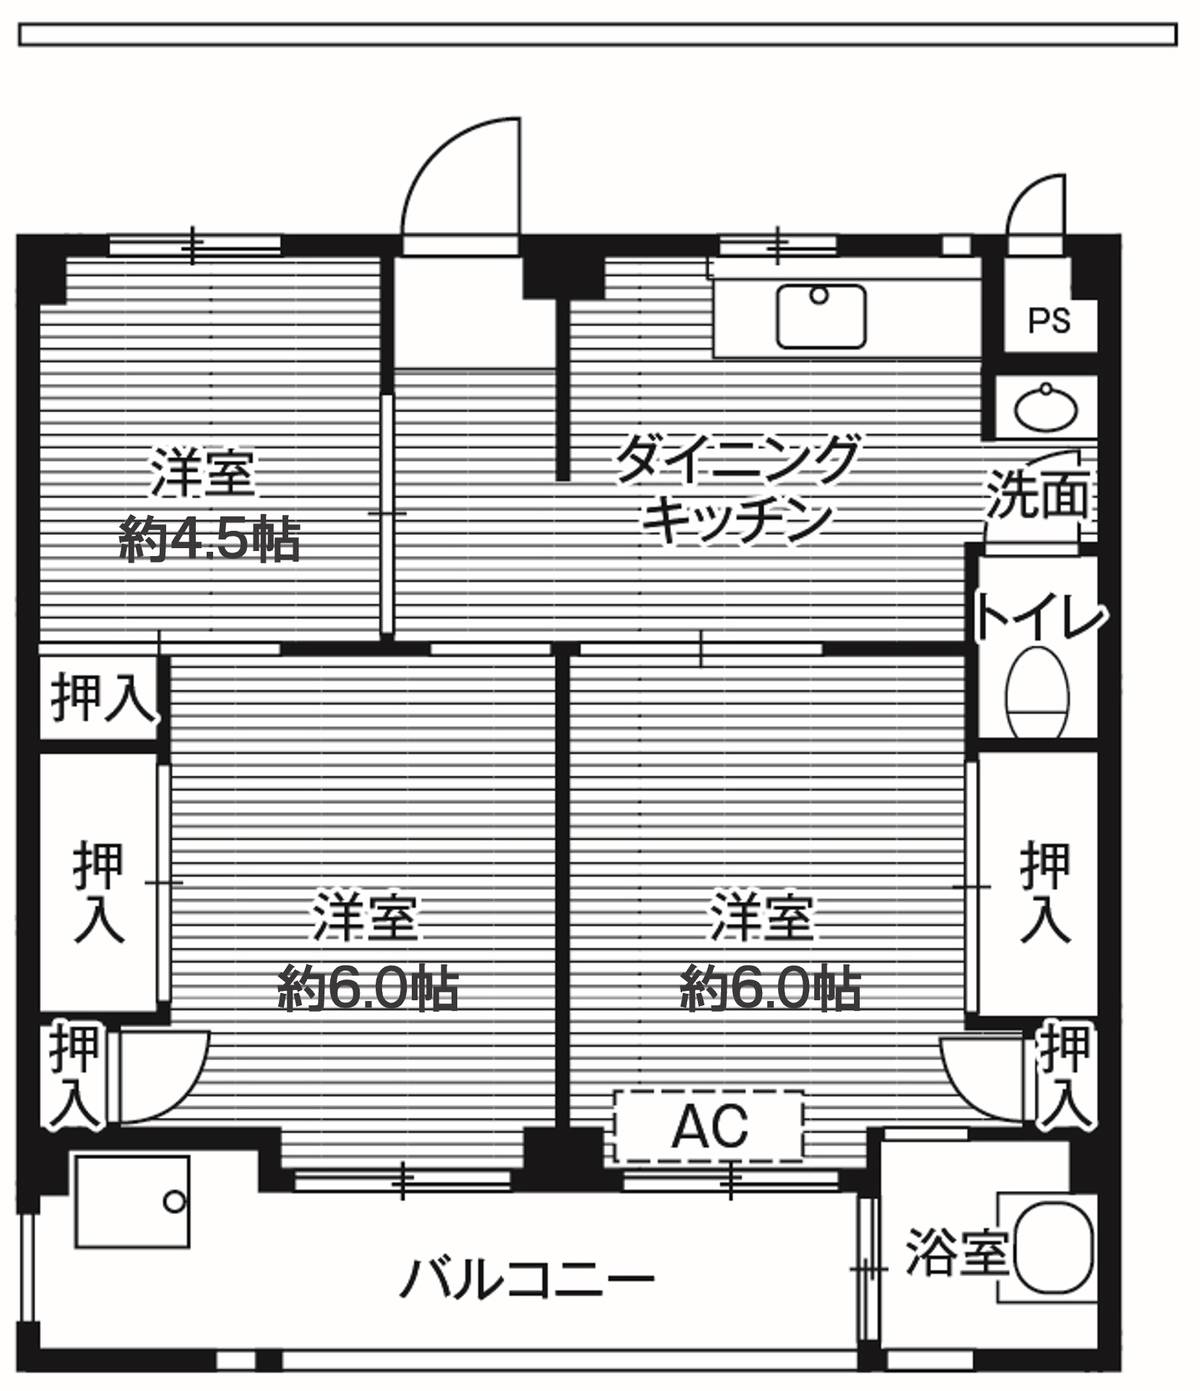 3DK floorplan of Village House Ageo in Ageo-shi